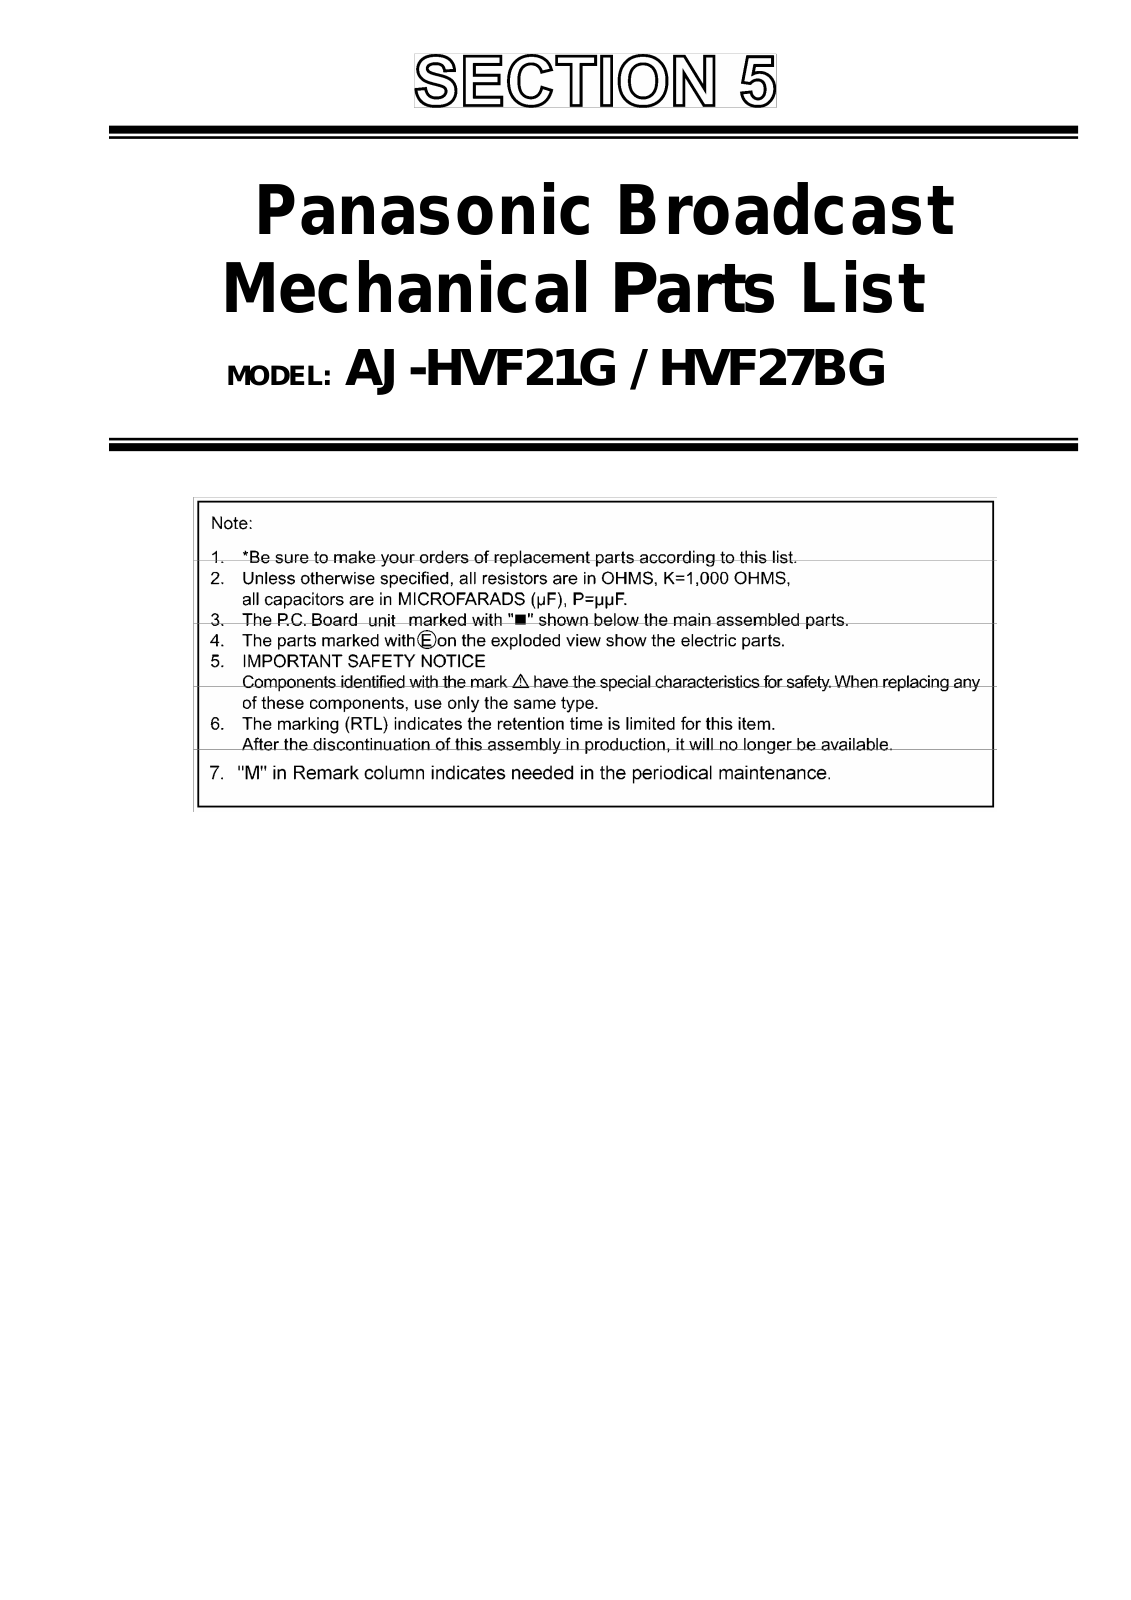 Panasonic aj-hvf27b parts list